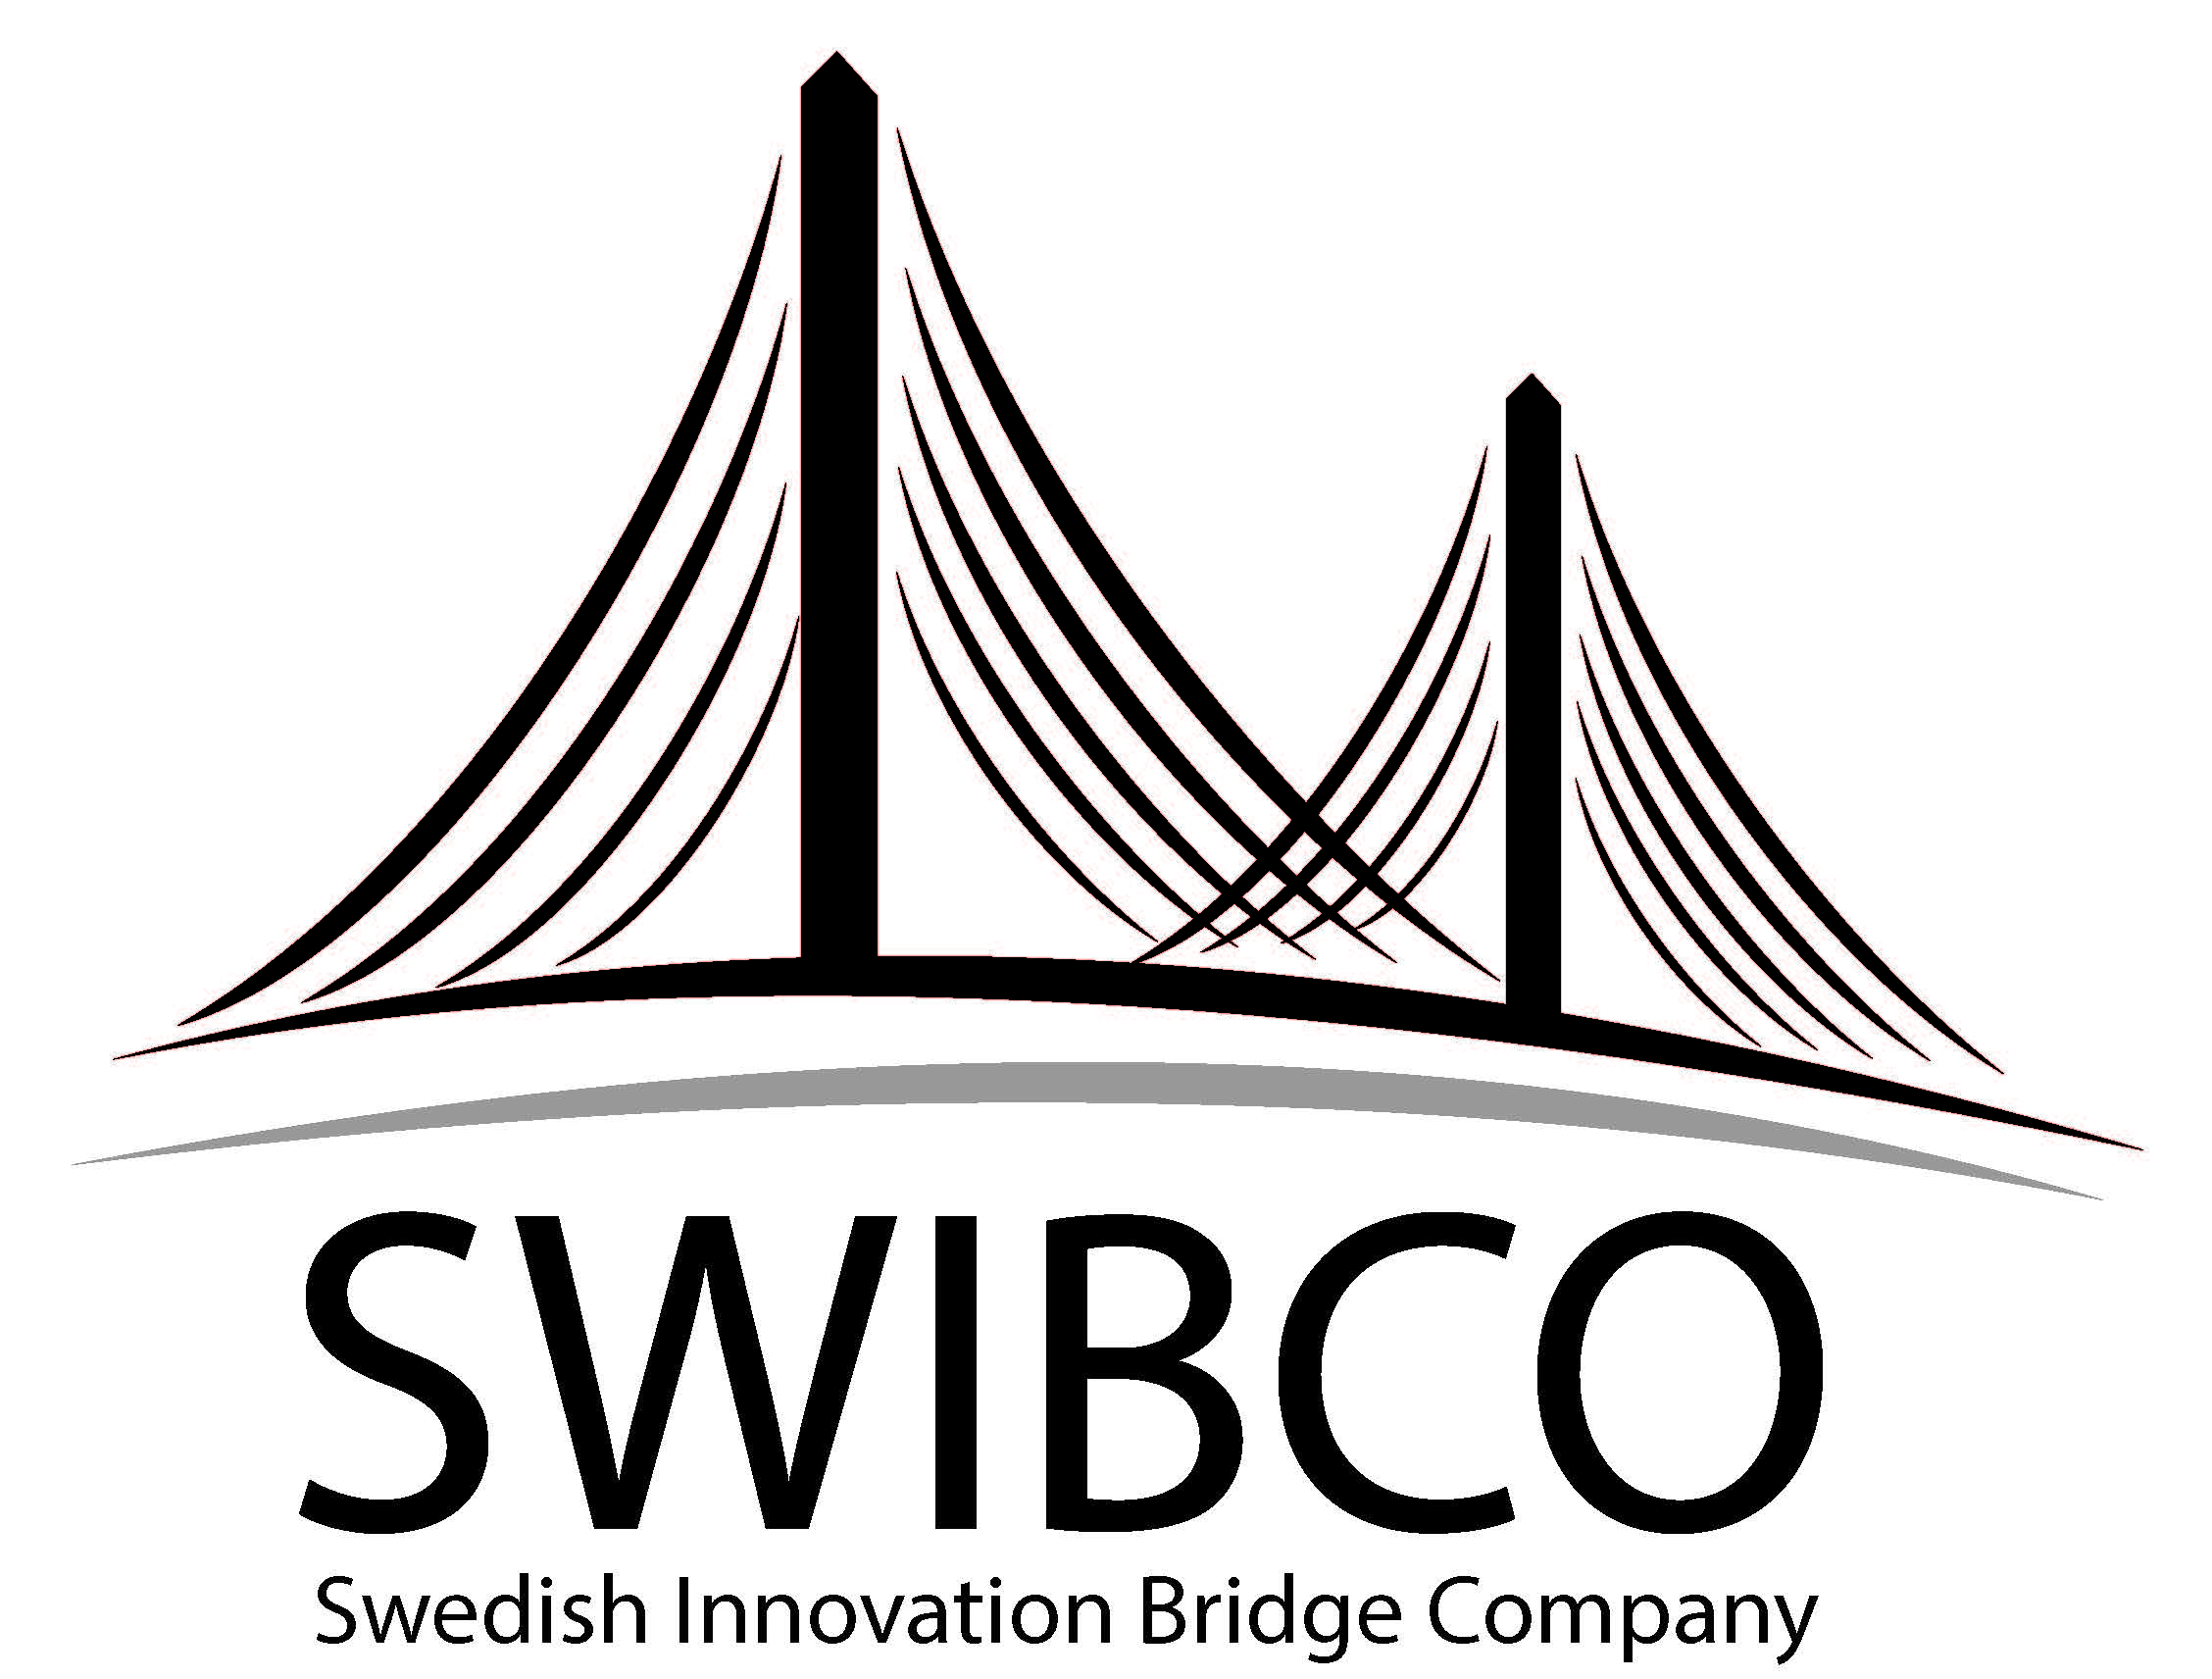 Swedish Innovation Bridge Company